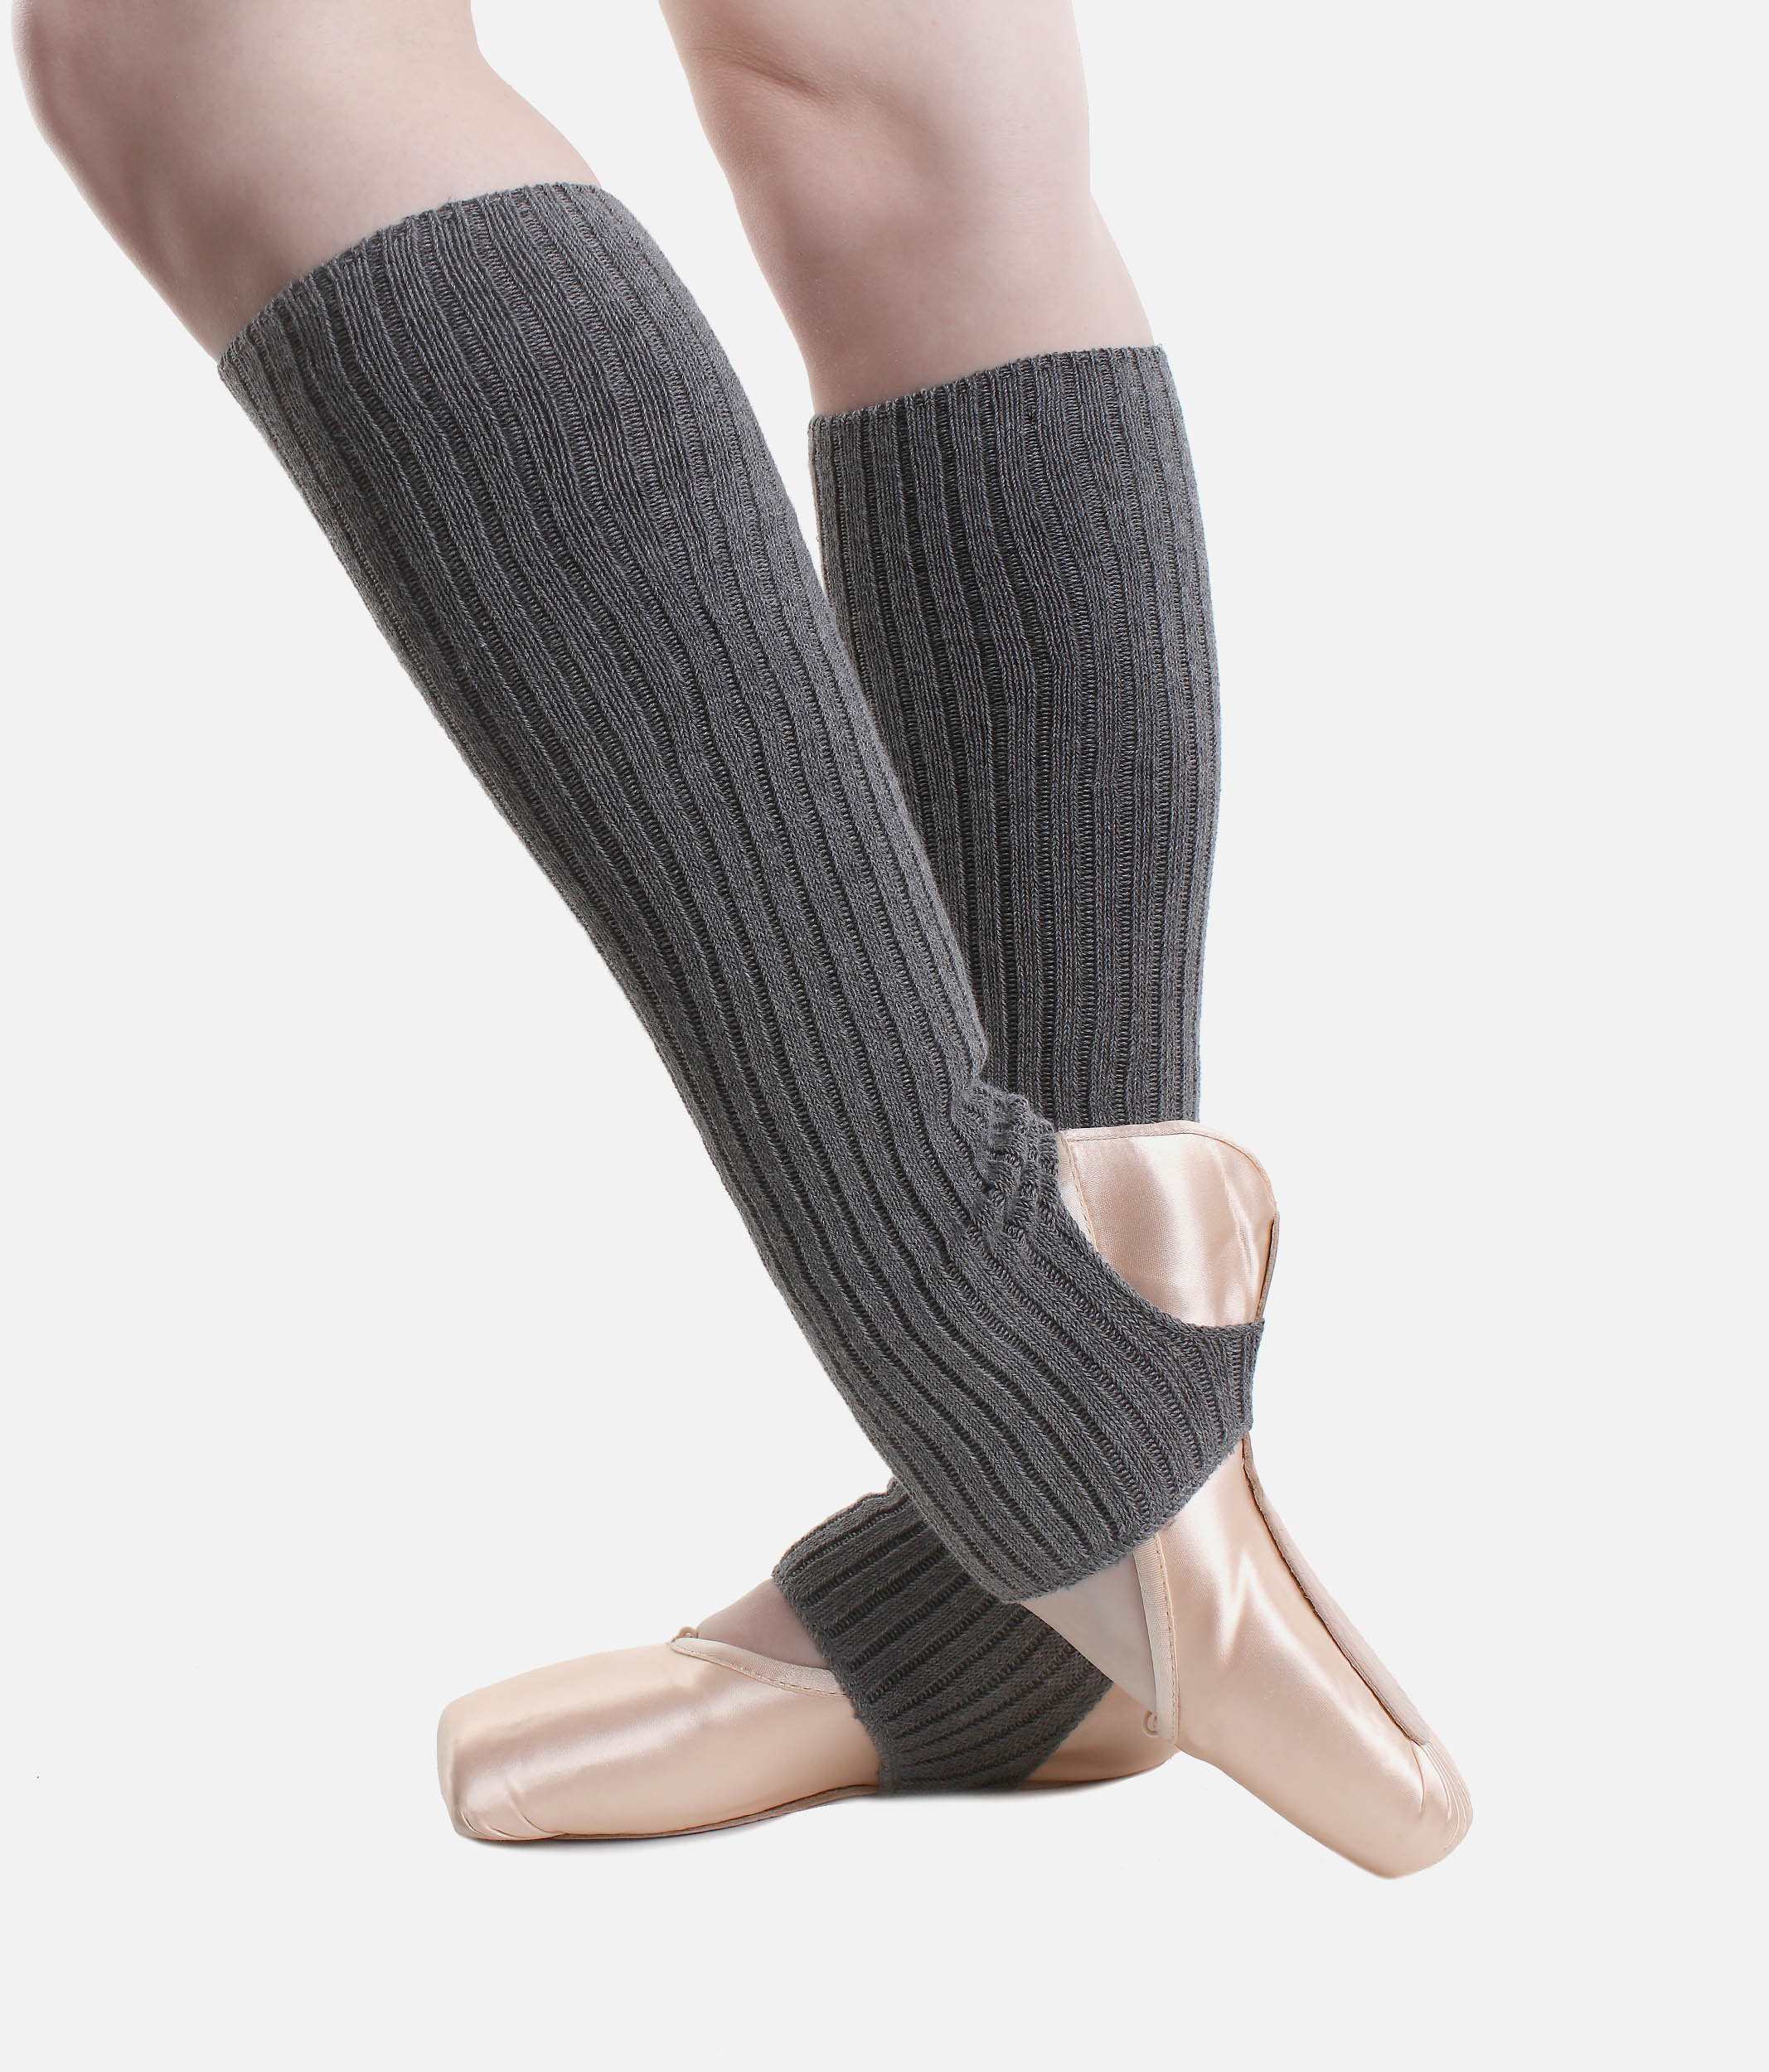 Classic Cordan Knit Leg Warmers  Intermezzo Dancewear Ballet Skating